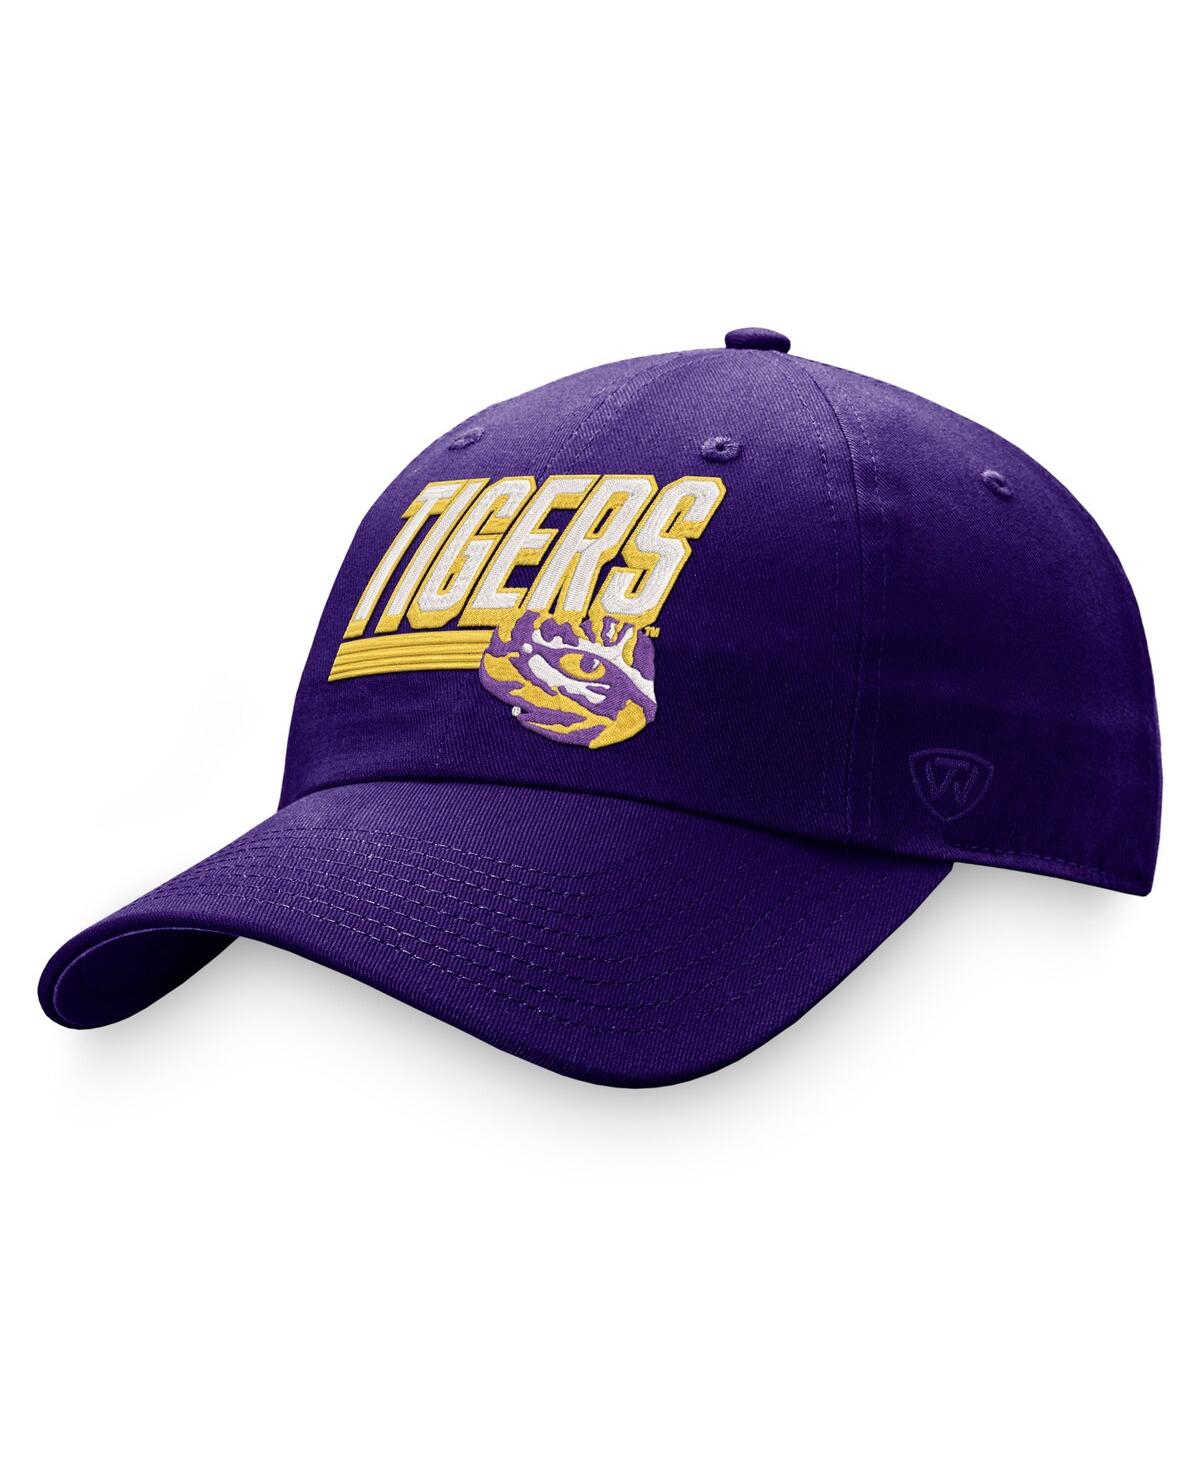 Shop Top Of The World Men's  Purple Lsu Tigers Slice Adjustable Hat